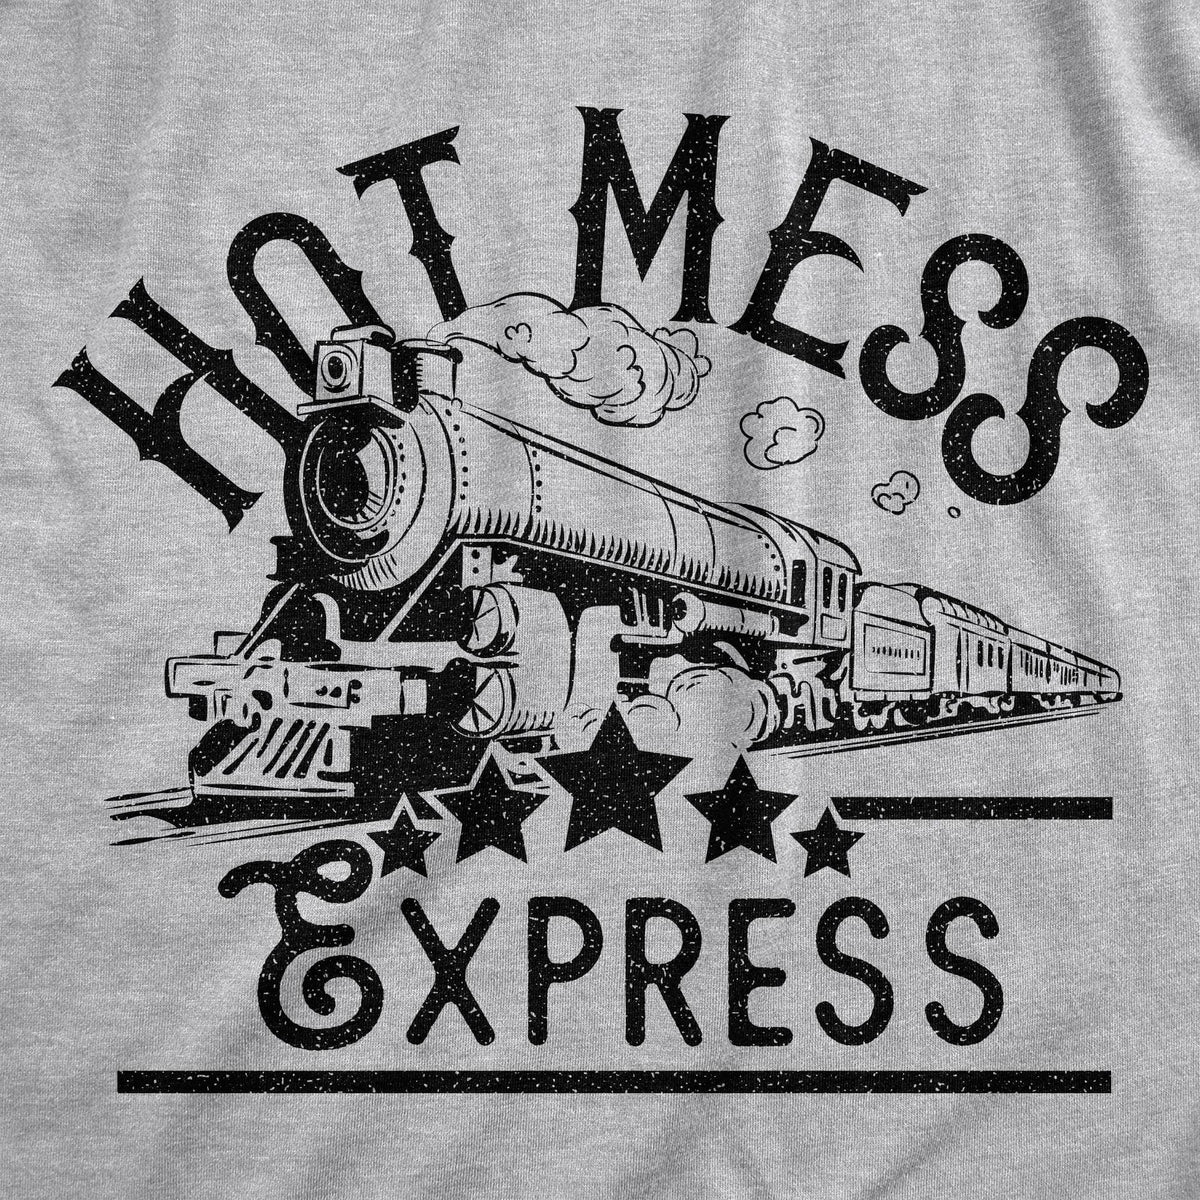 Hot Mess Express Women&#39;s Tshirt - Crazy Dog T-Shirts